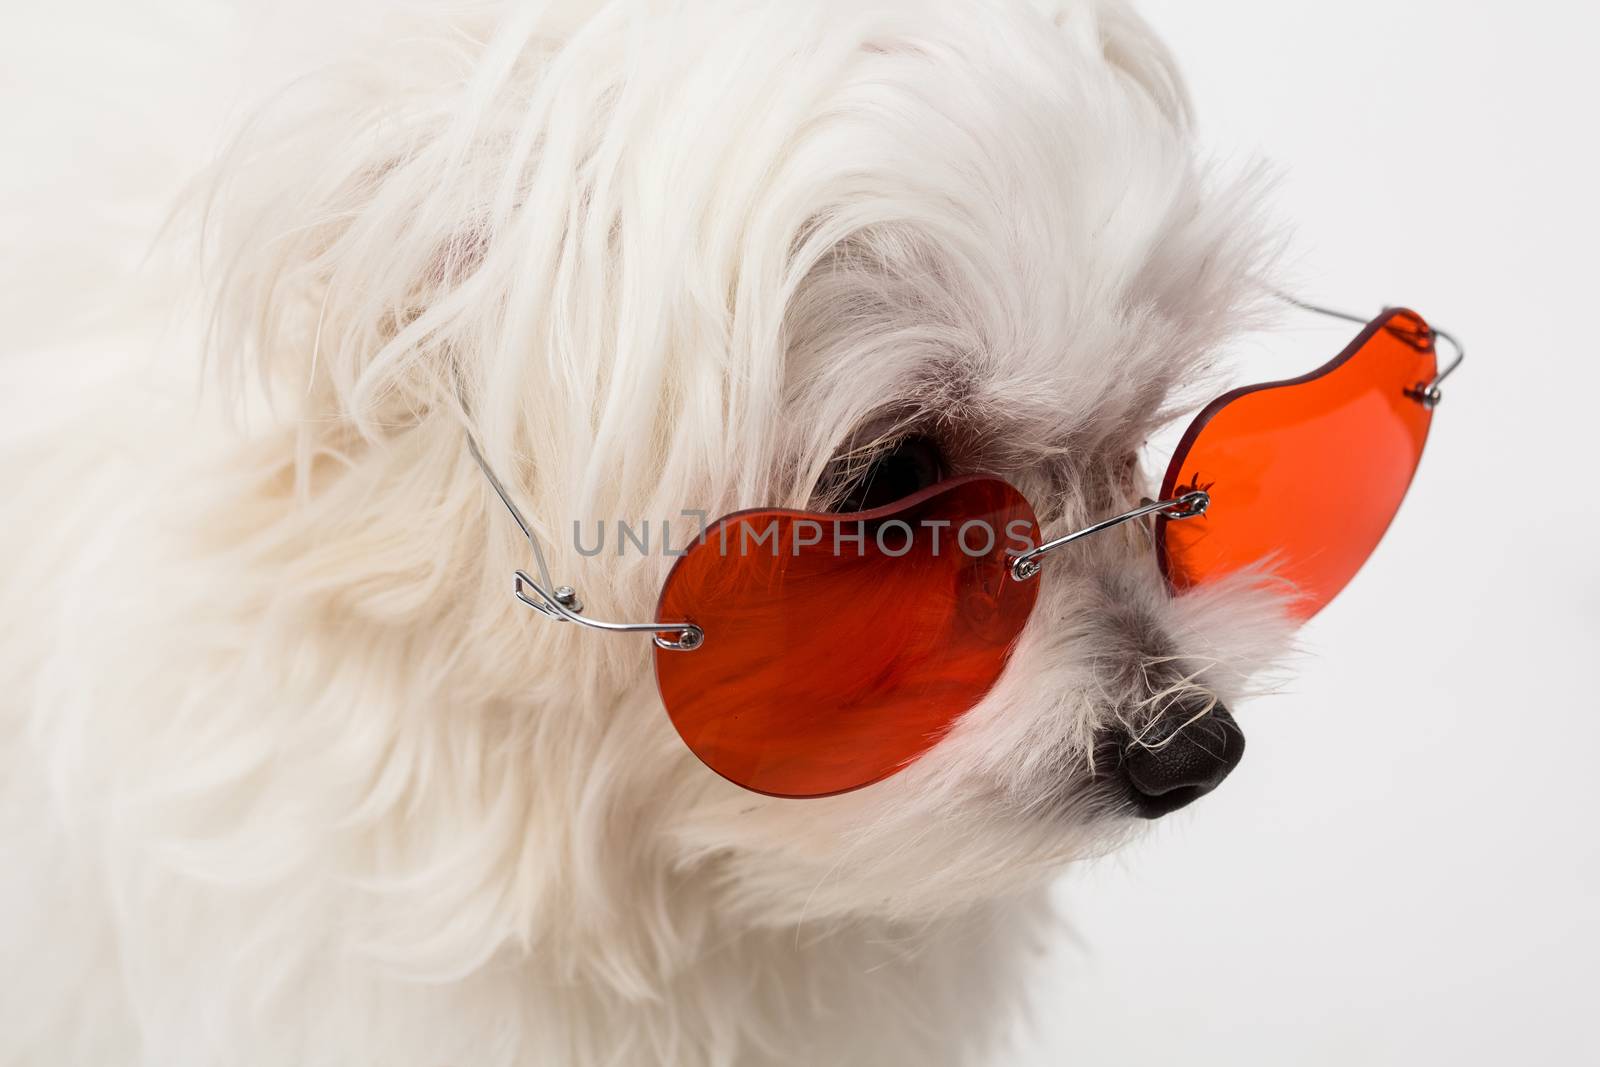 The maltese puppy dog on white background